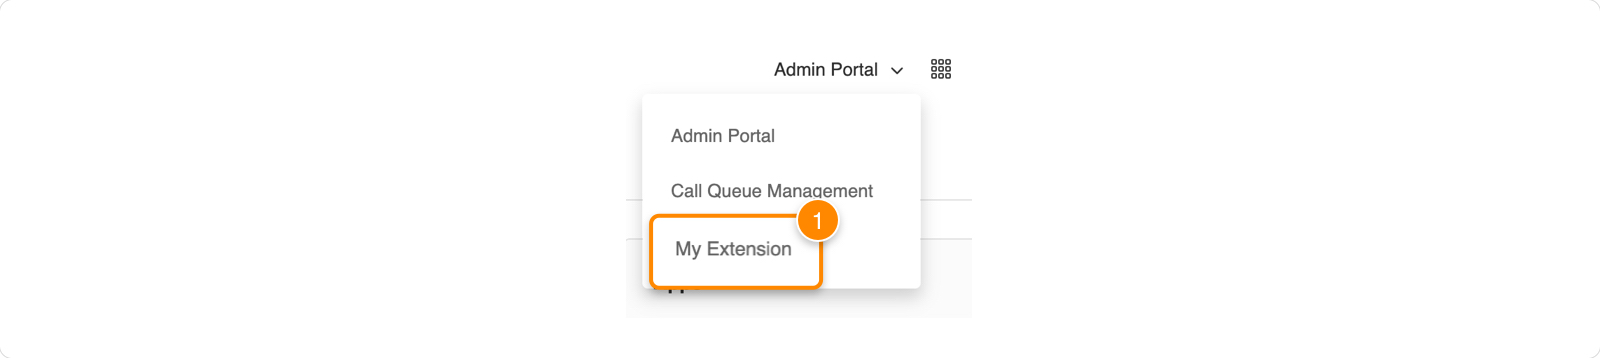 RingCentral Admin Portal Settings